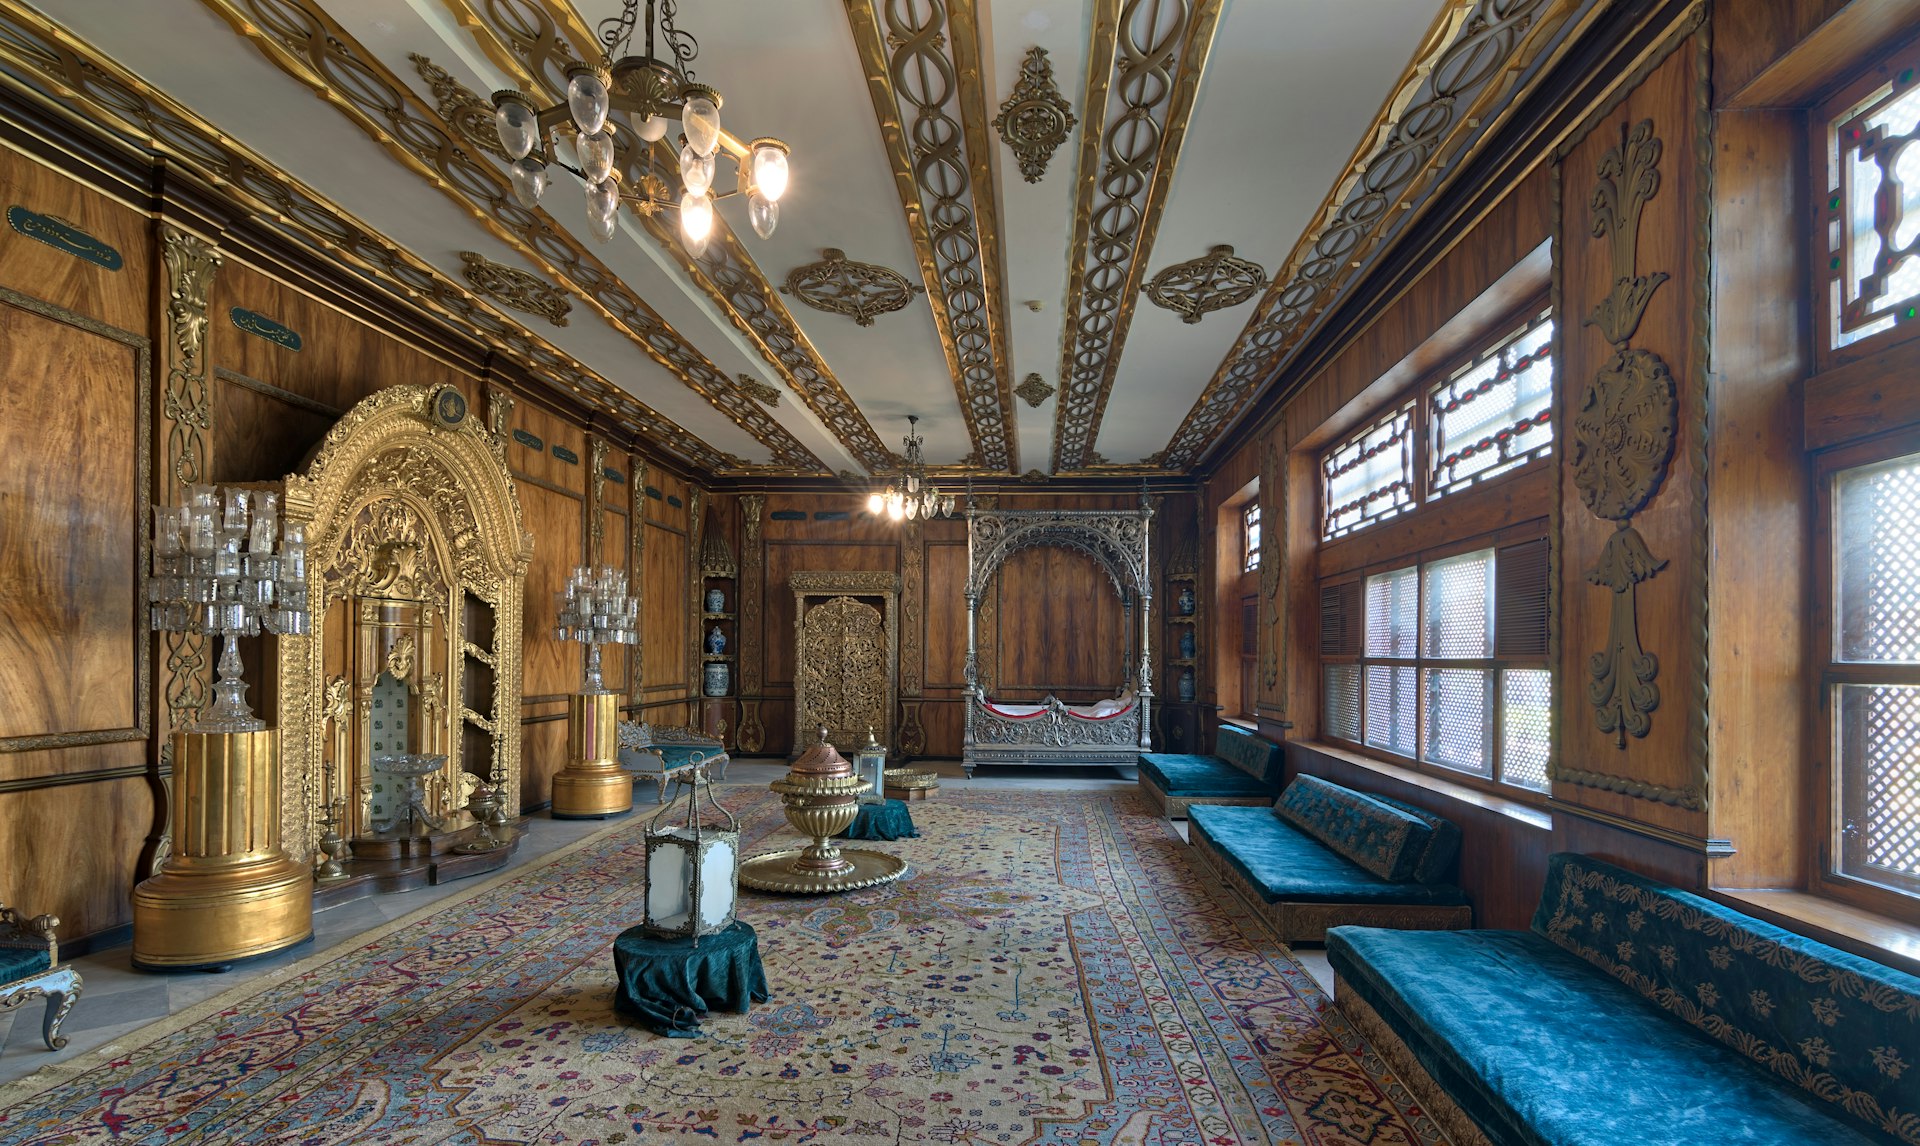 Lavish wood-panelled interior of an ornate room at Manial Palace